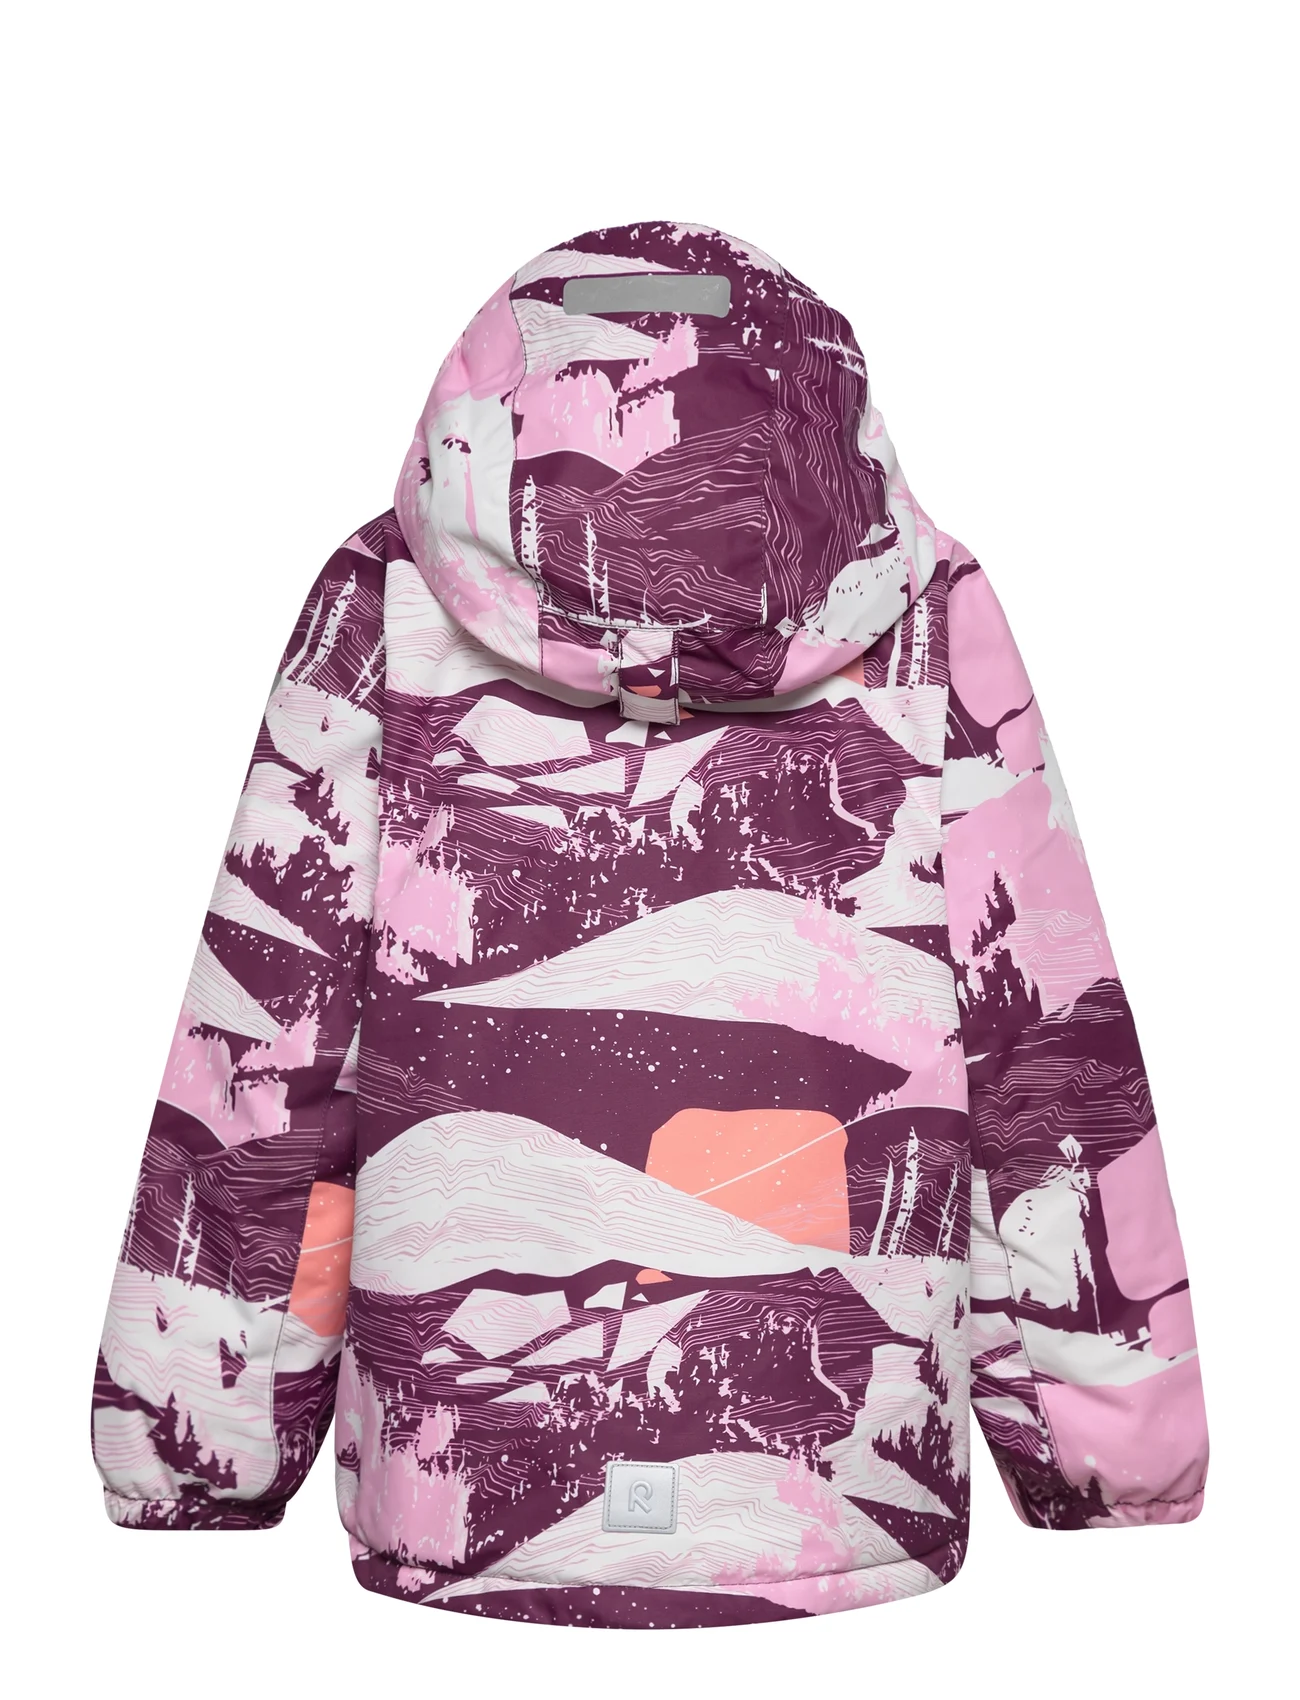 Reima - Winter jacket, Kanto - winter jackets - deep purple - 1